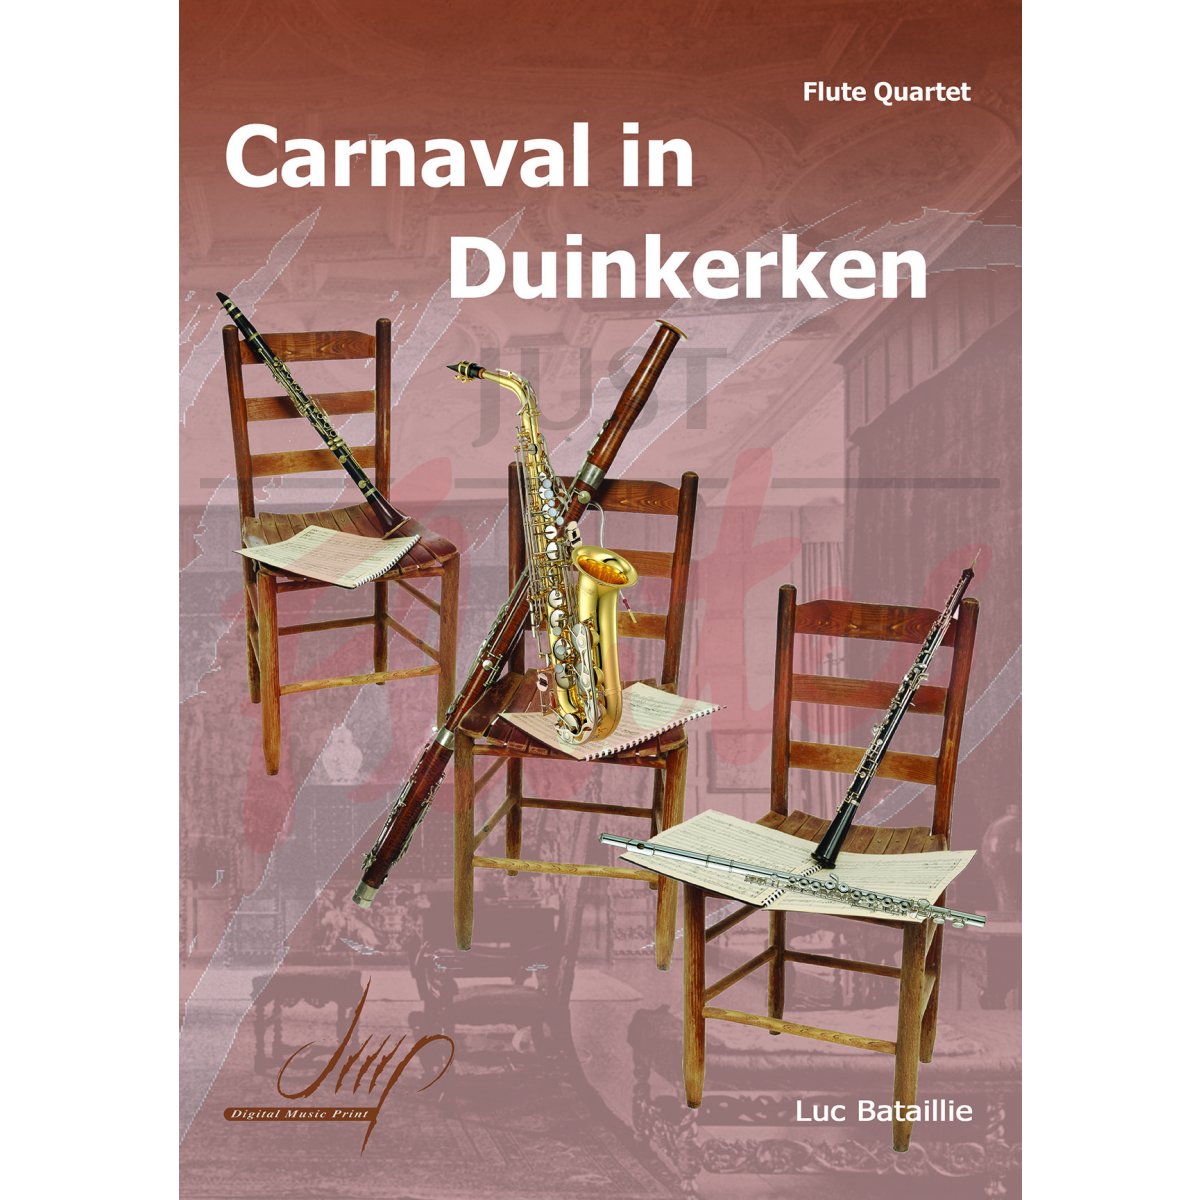 Carnaval in Duinkerken